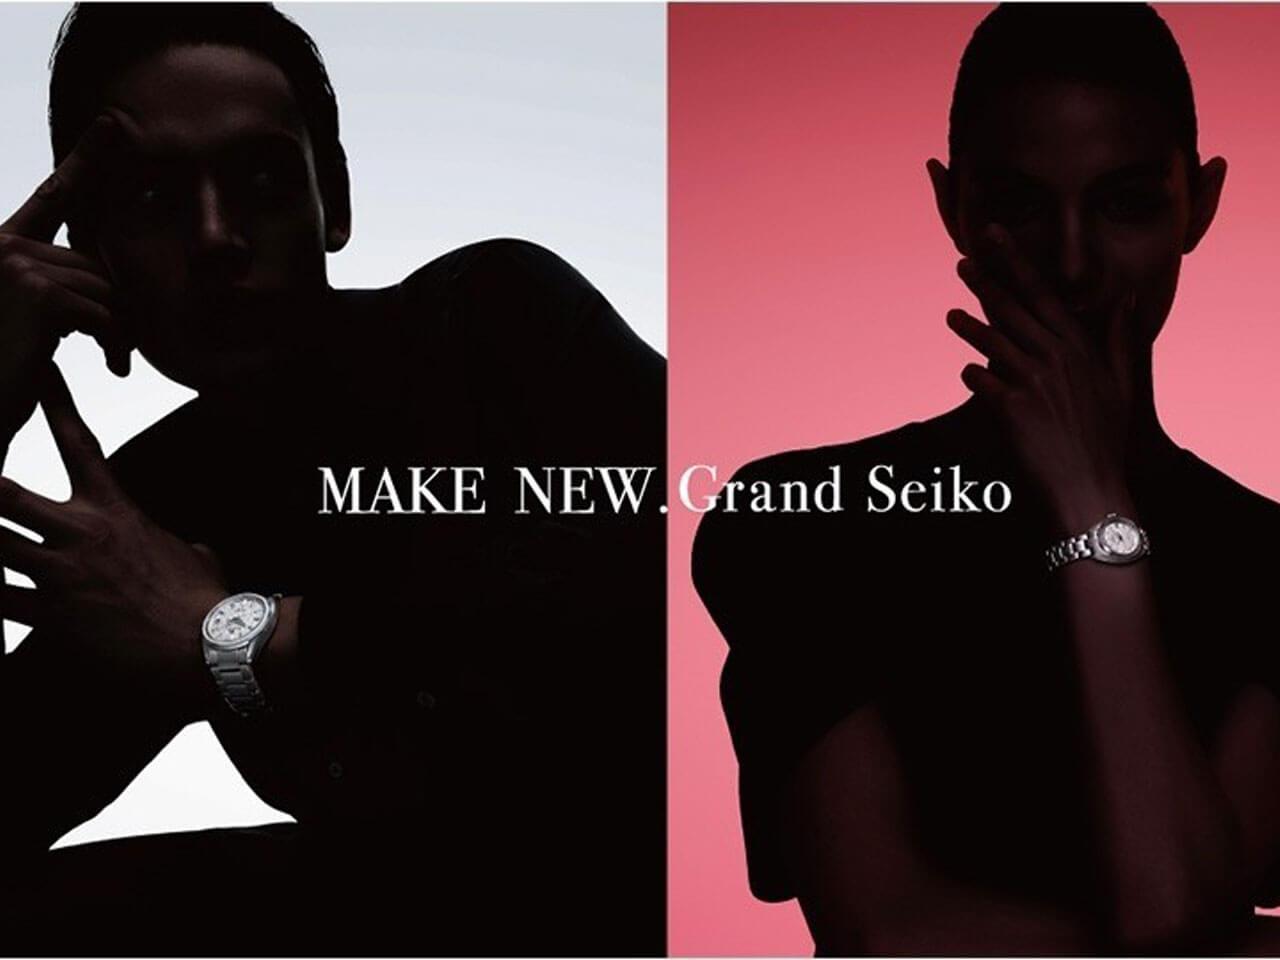 「MAKE NEW. Grand Seiko」